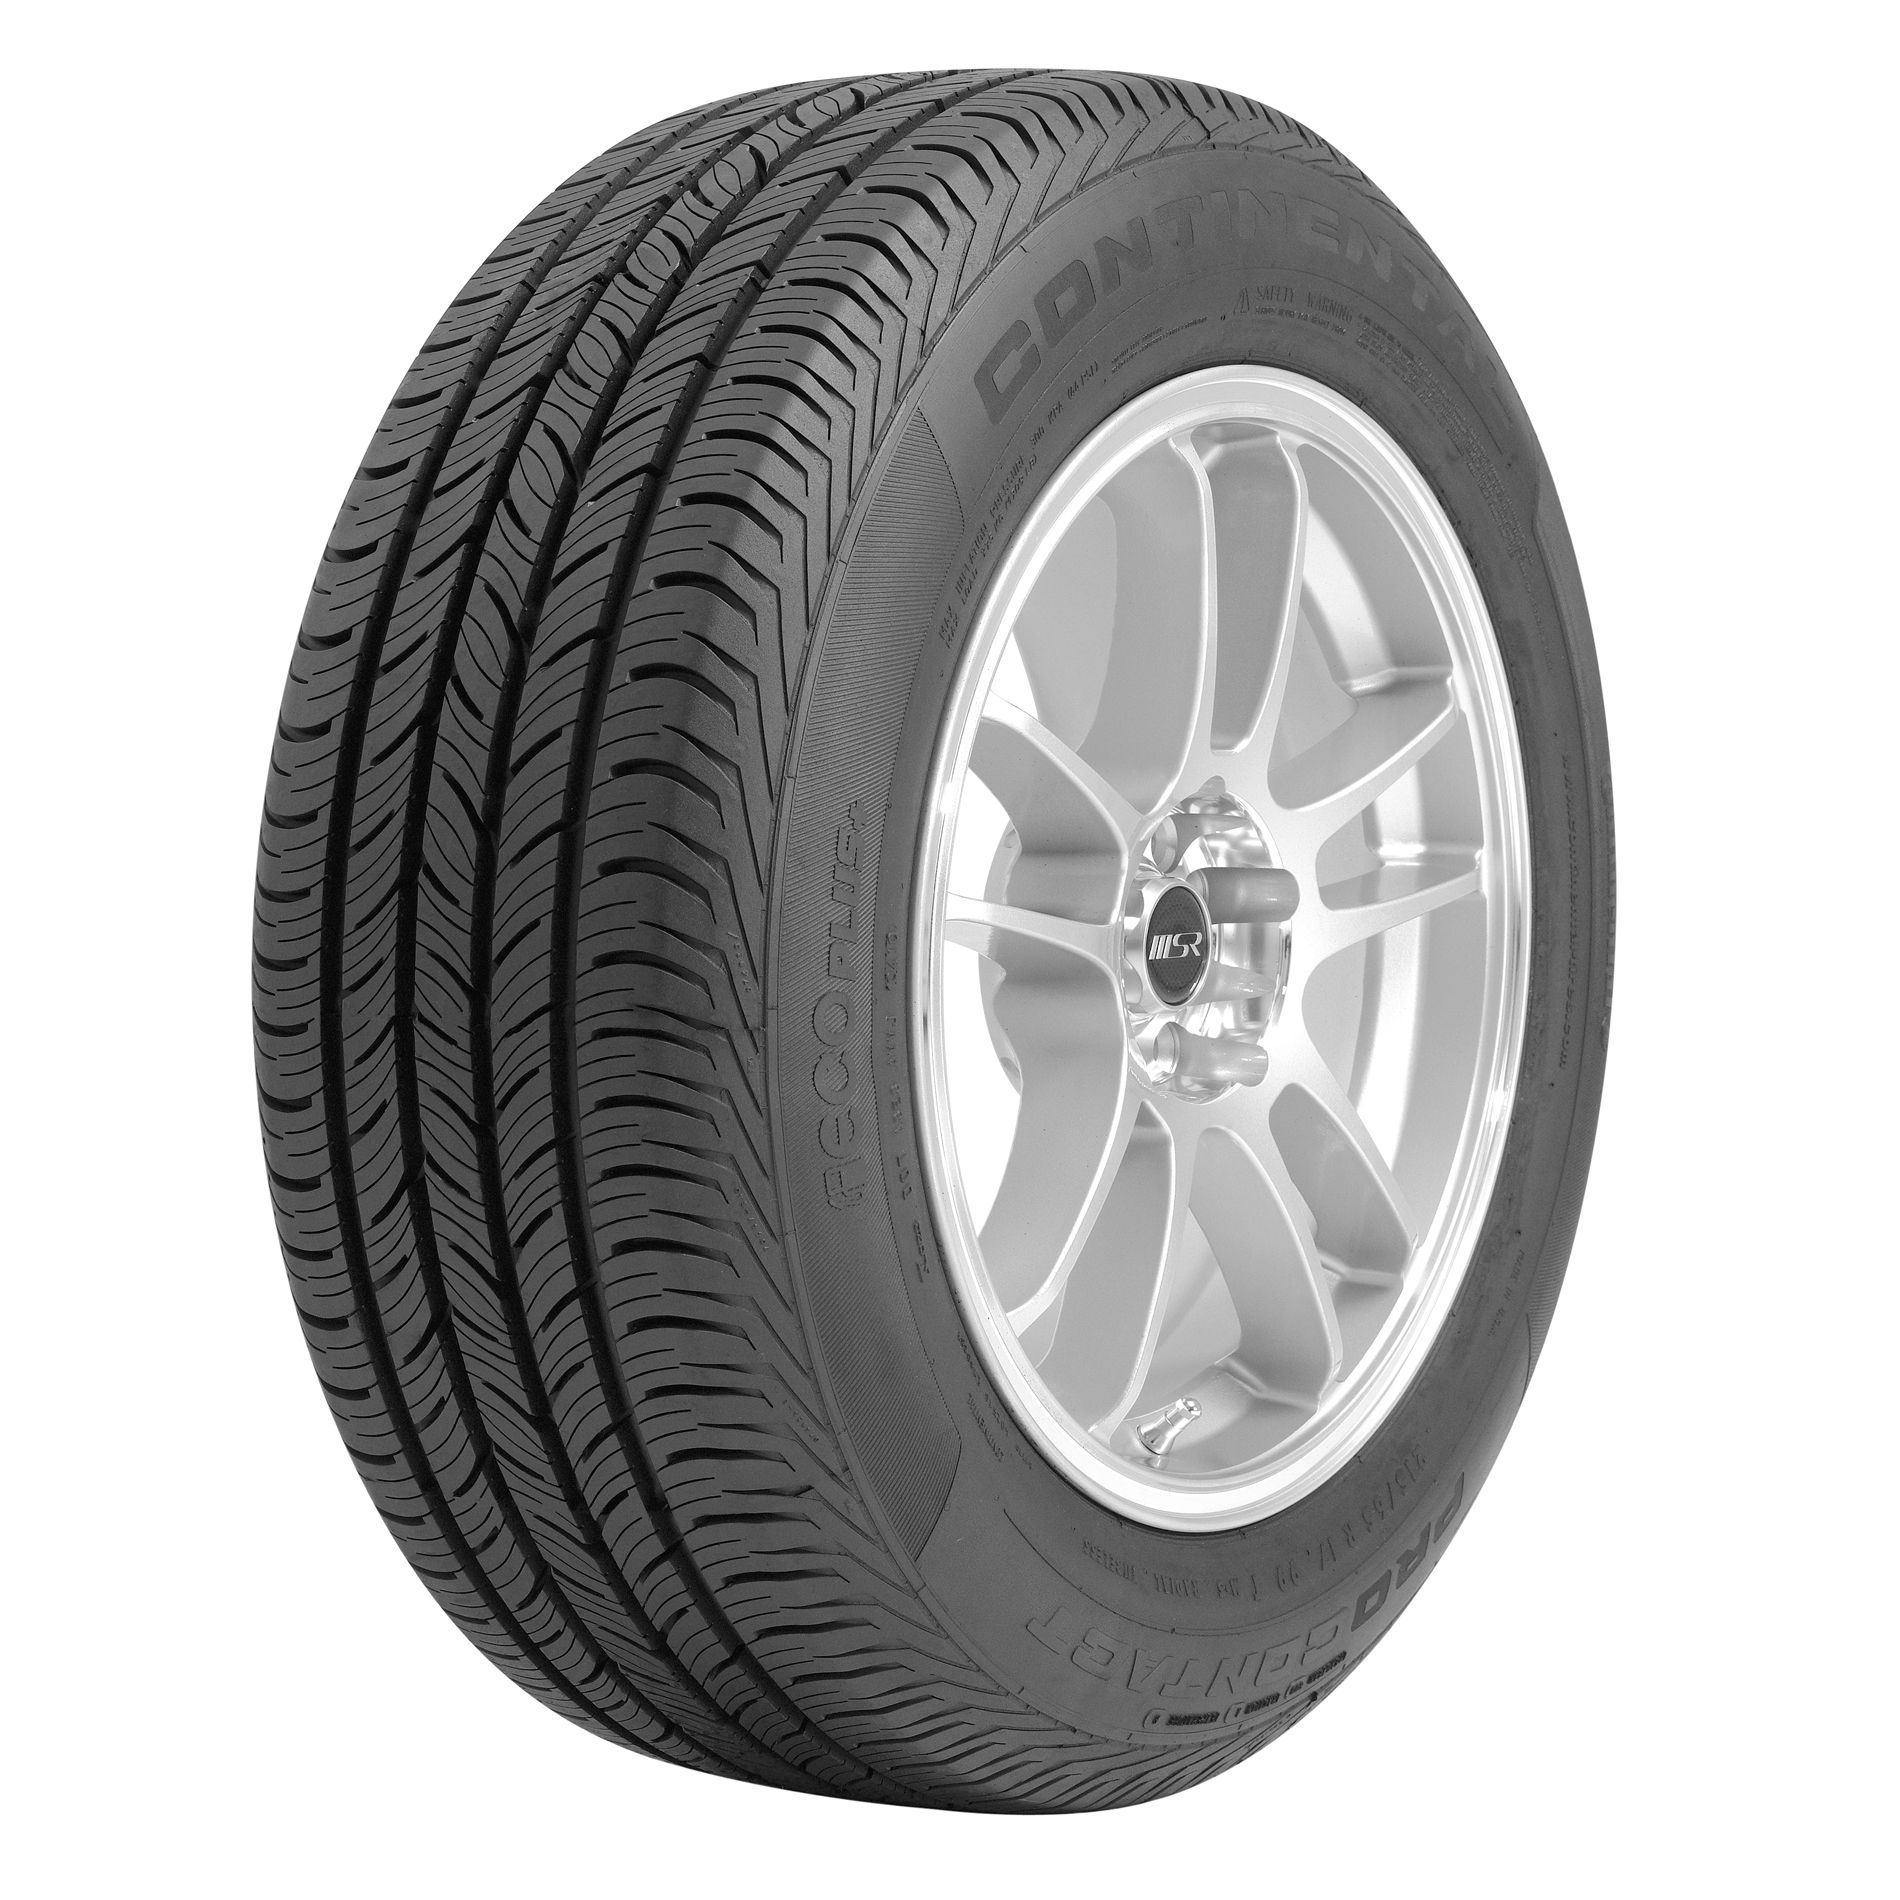 Continental Pro Contact Eco Plus - 185/60R15 84T BW - All-Season Tire